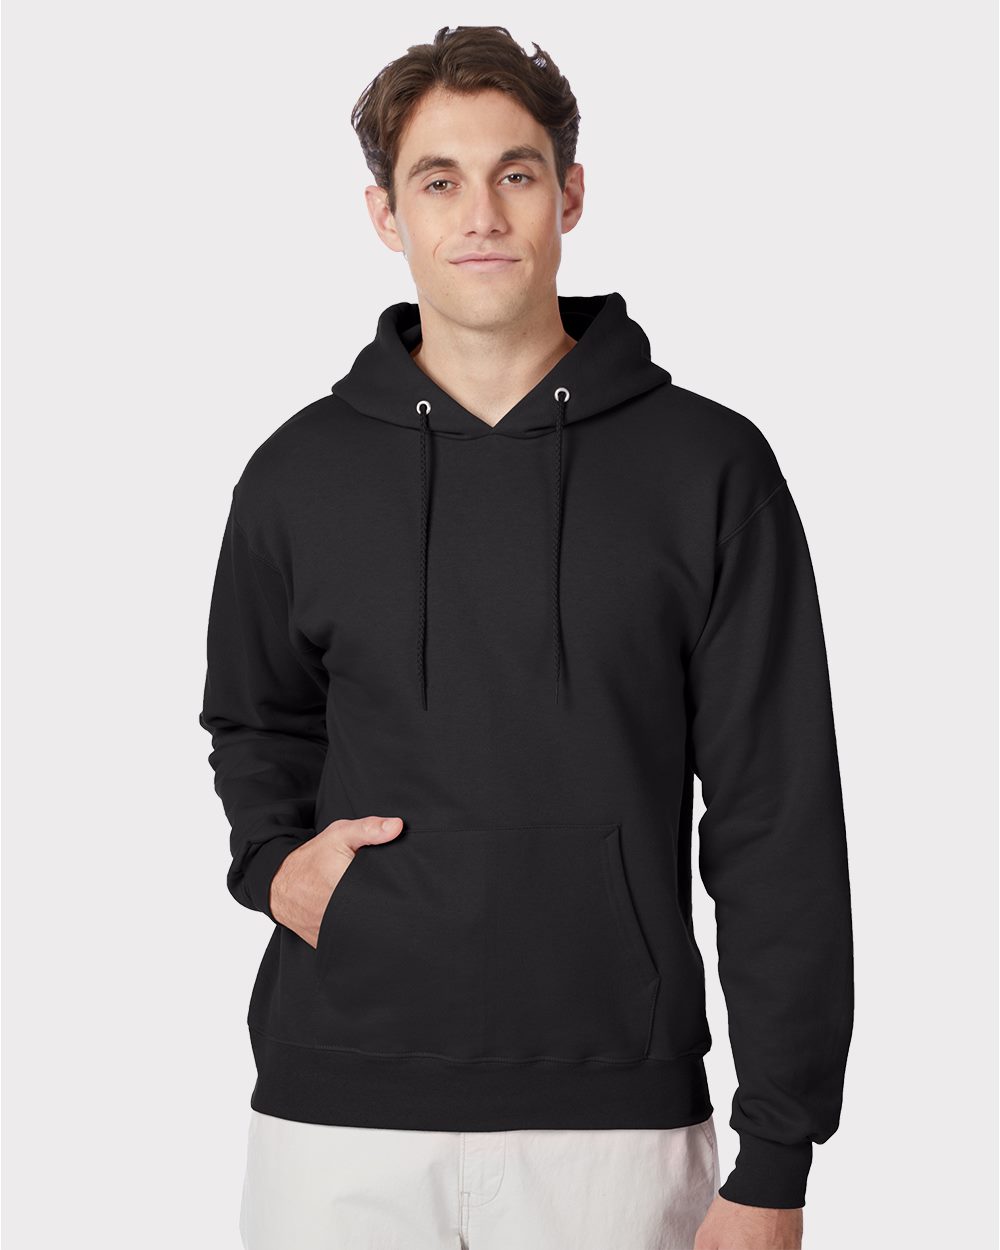 Hanes F170 - Ultimate Cotton® Hooded Sweatshirt